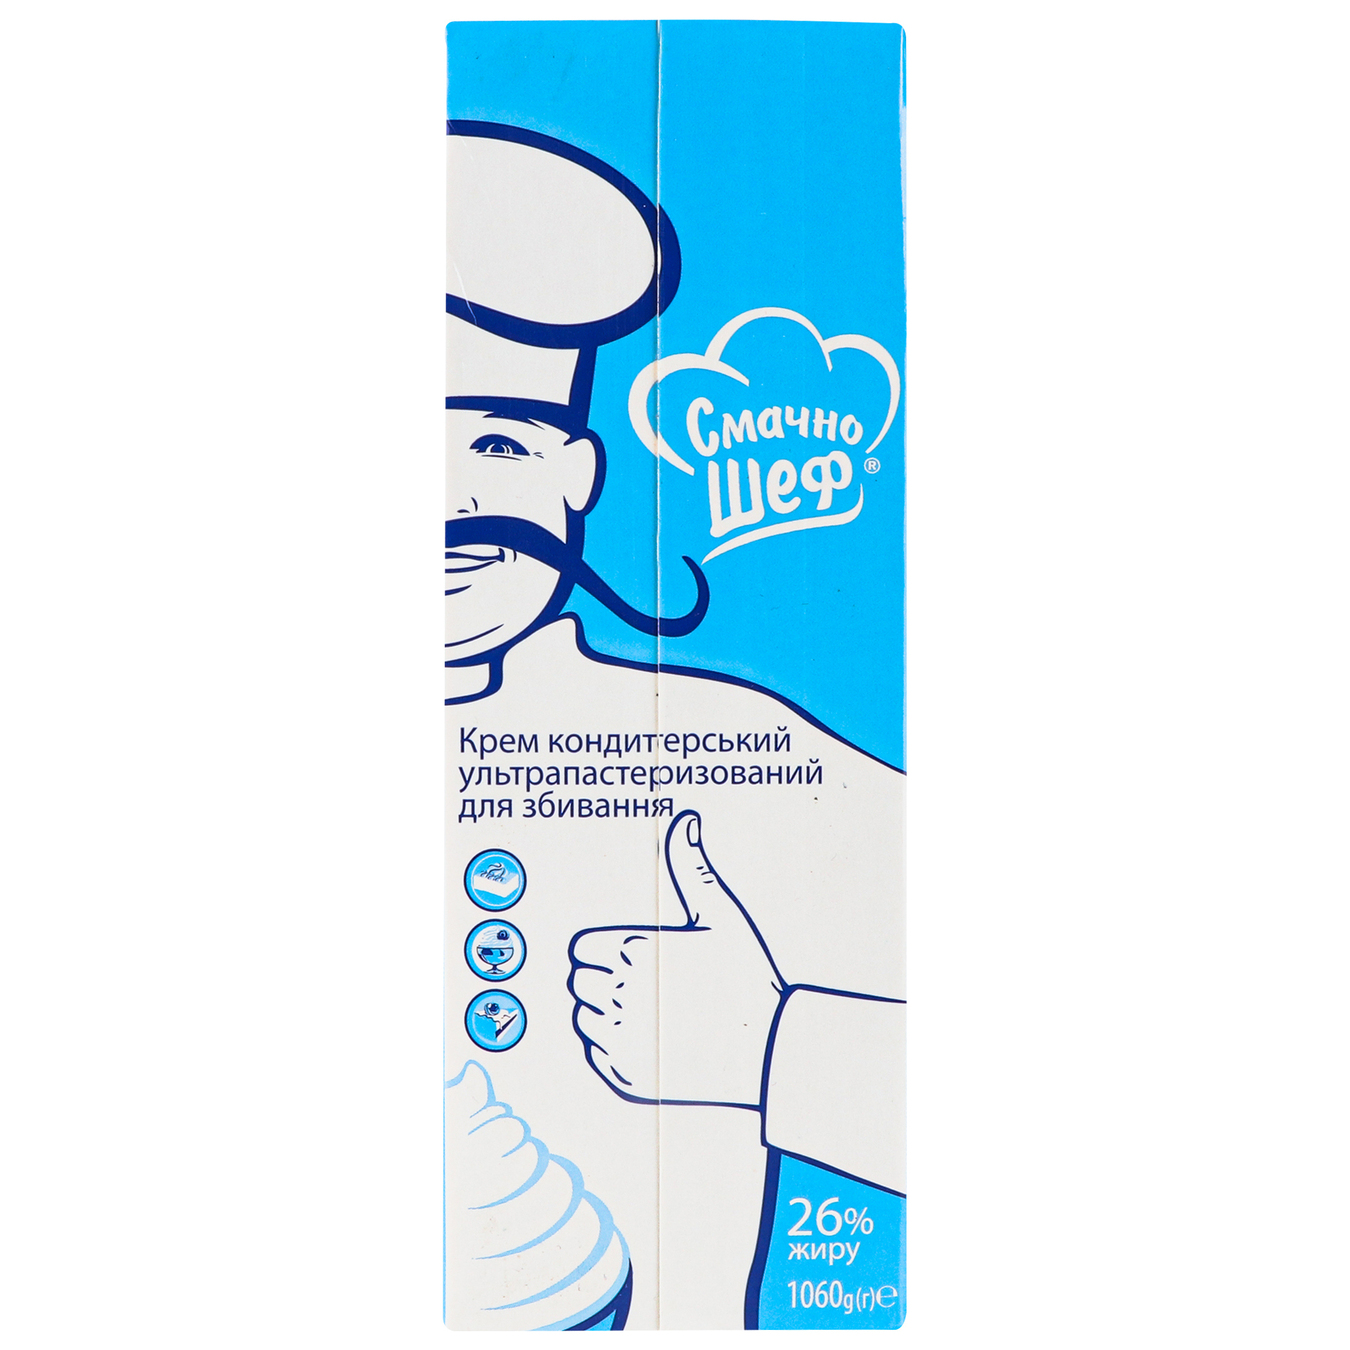 Cream Smachno Shef Сonfectionery UltraPasteurized 26% 1060g 7